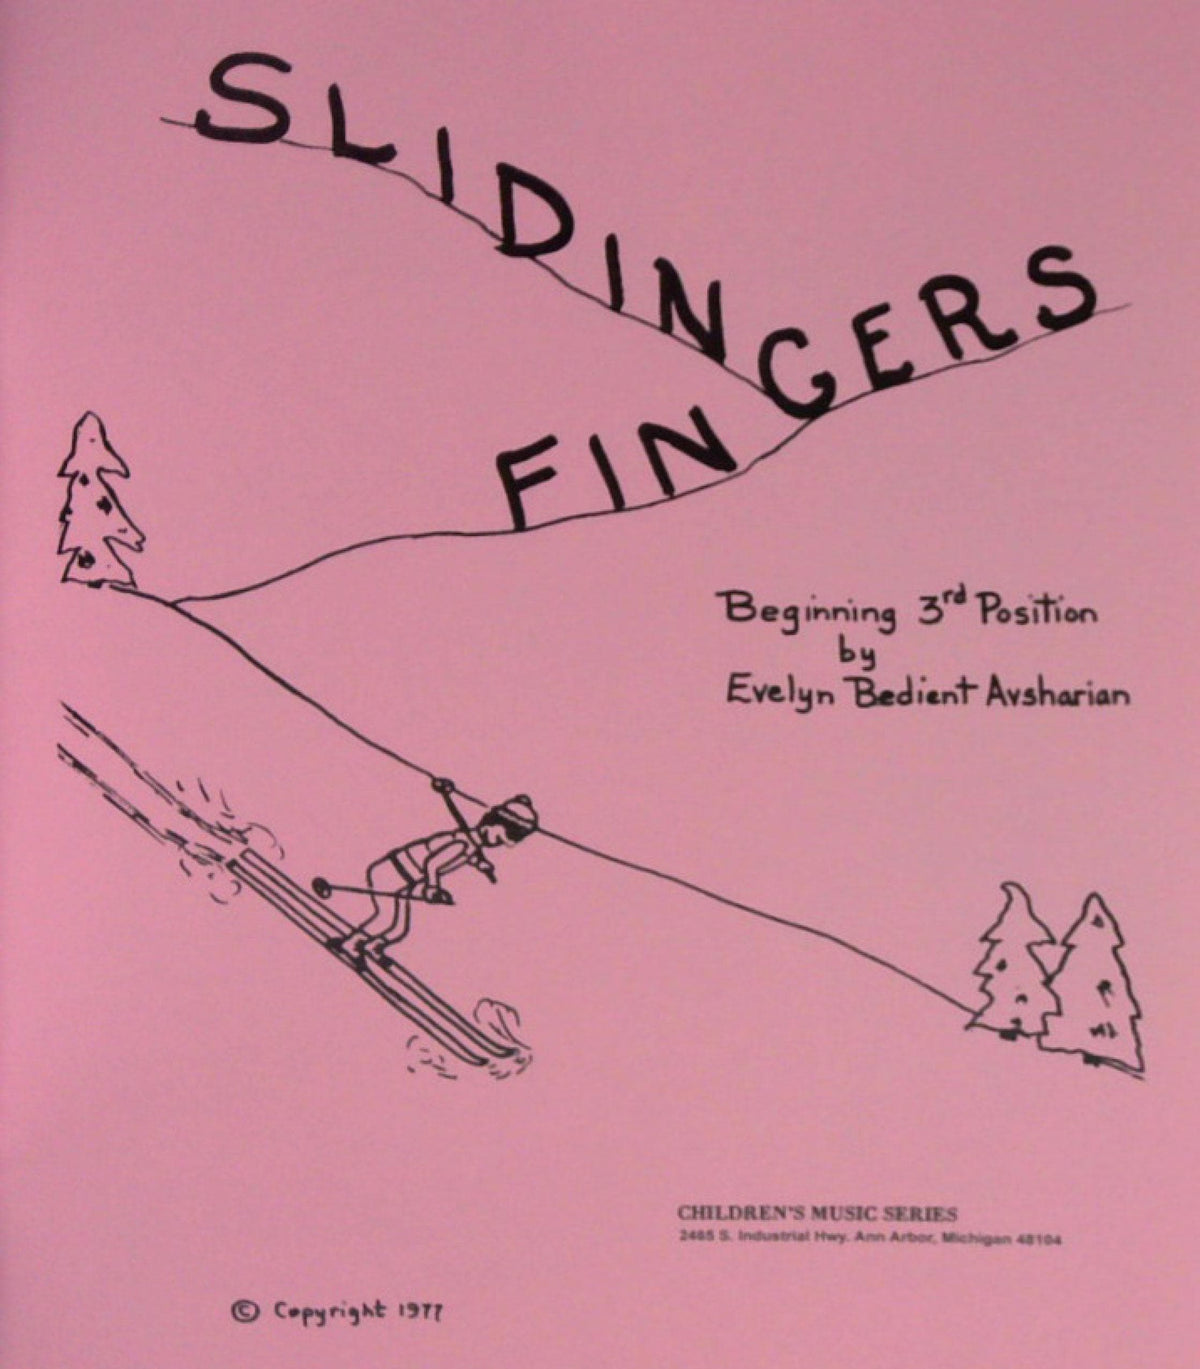 Sliding Fingers: Beginning 3rd Position - Beginner Book by Evelyn Avsharian - Digital Download